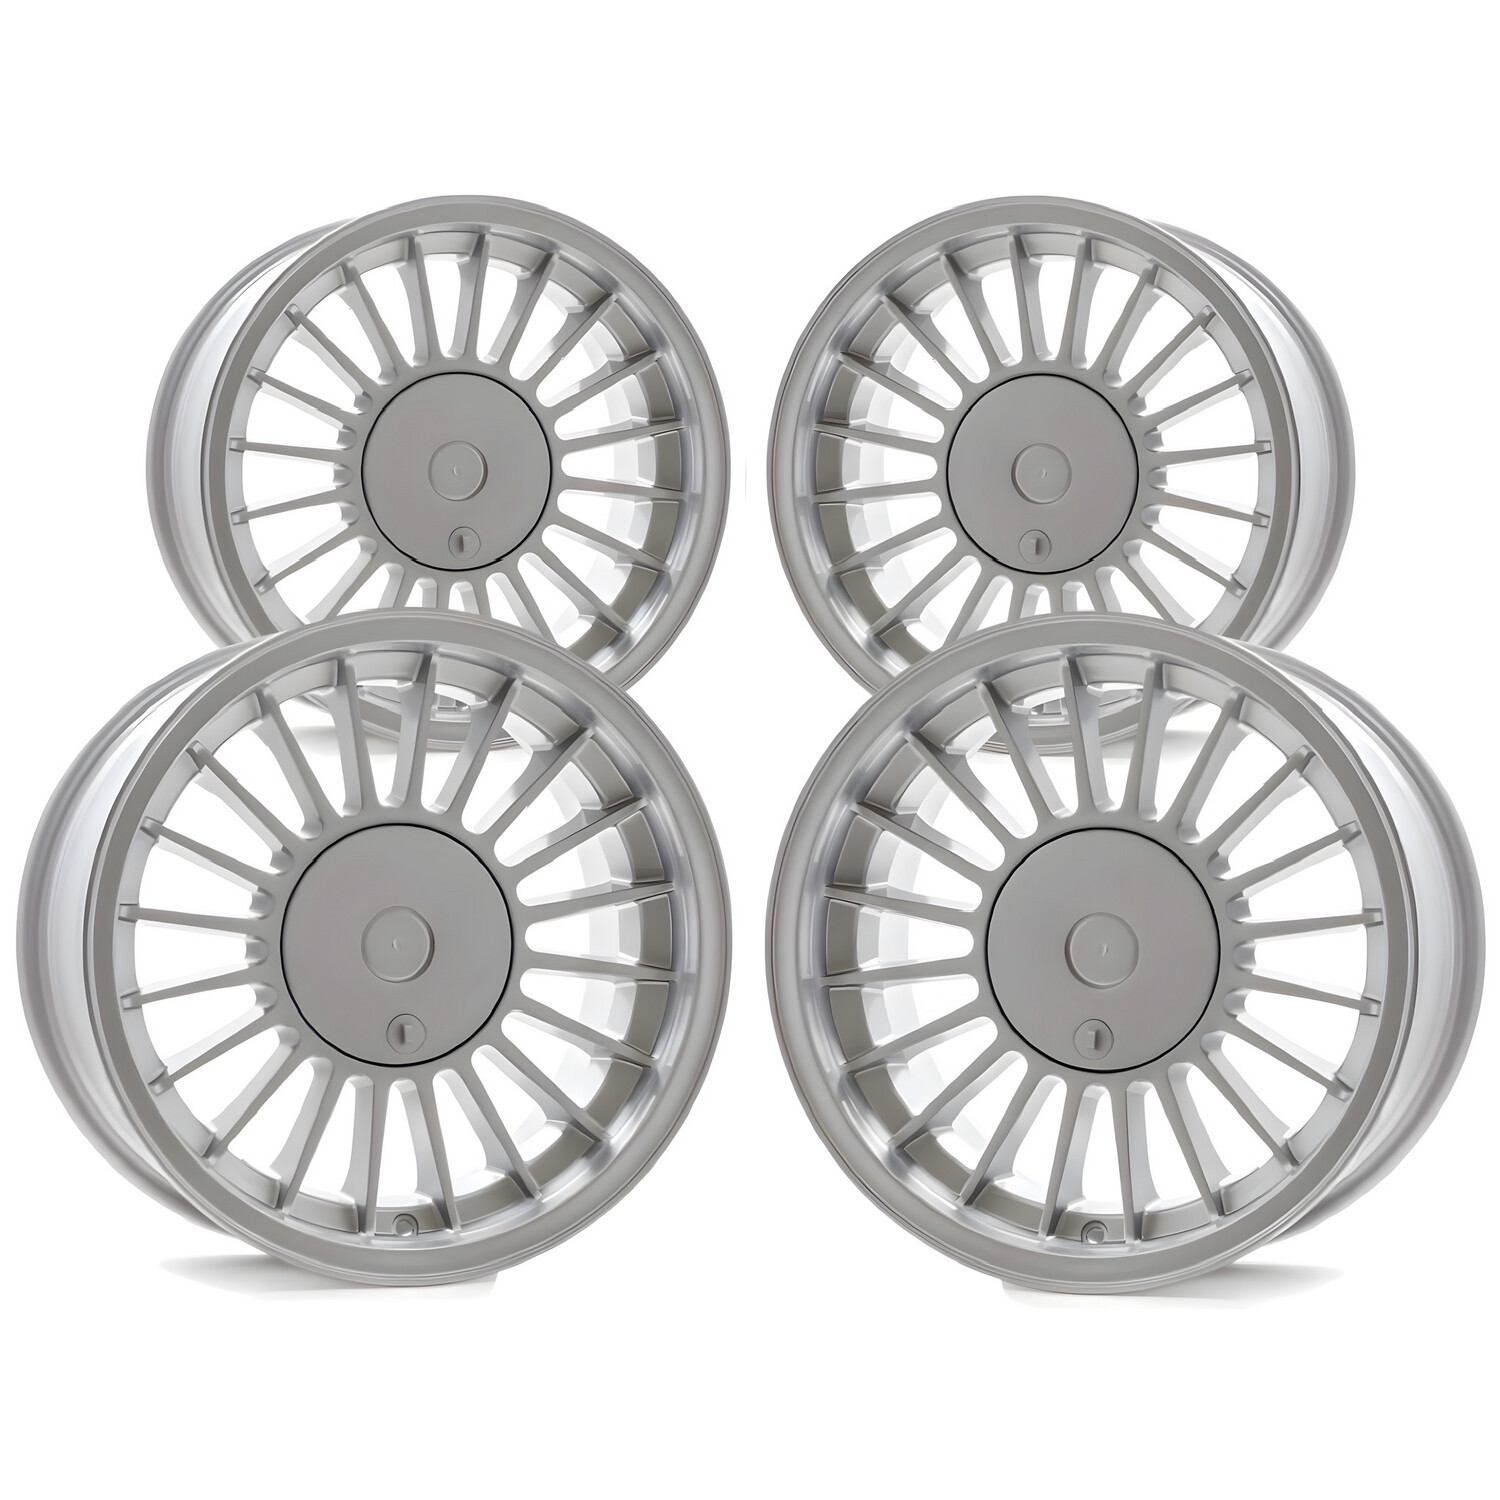 16" Maxilite Alpina Classic Softline Style Wheels (4x100 16x7 & 16x8 ET28 Staggered Set)